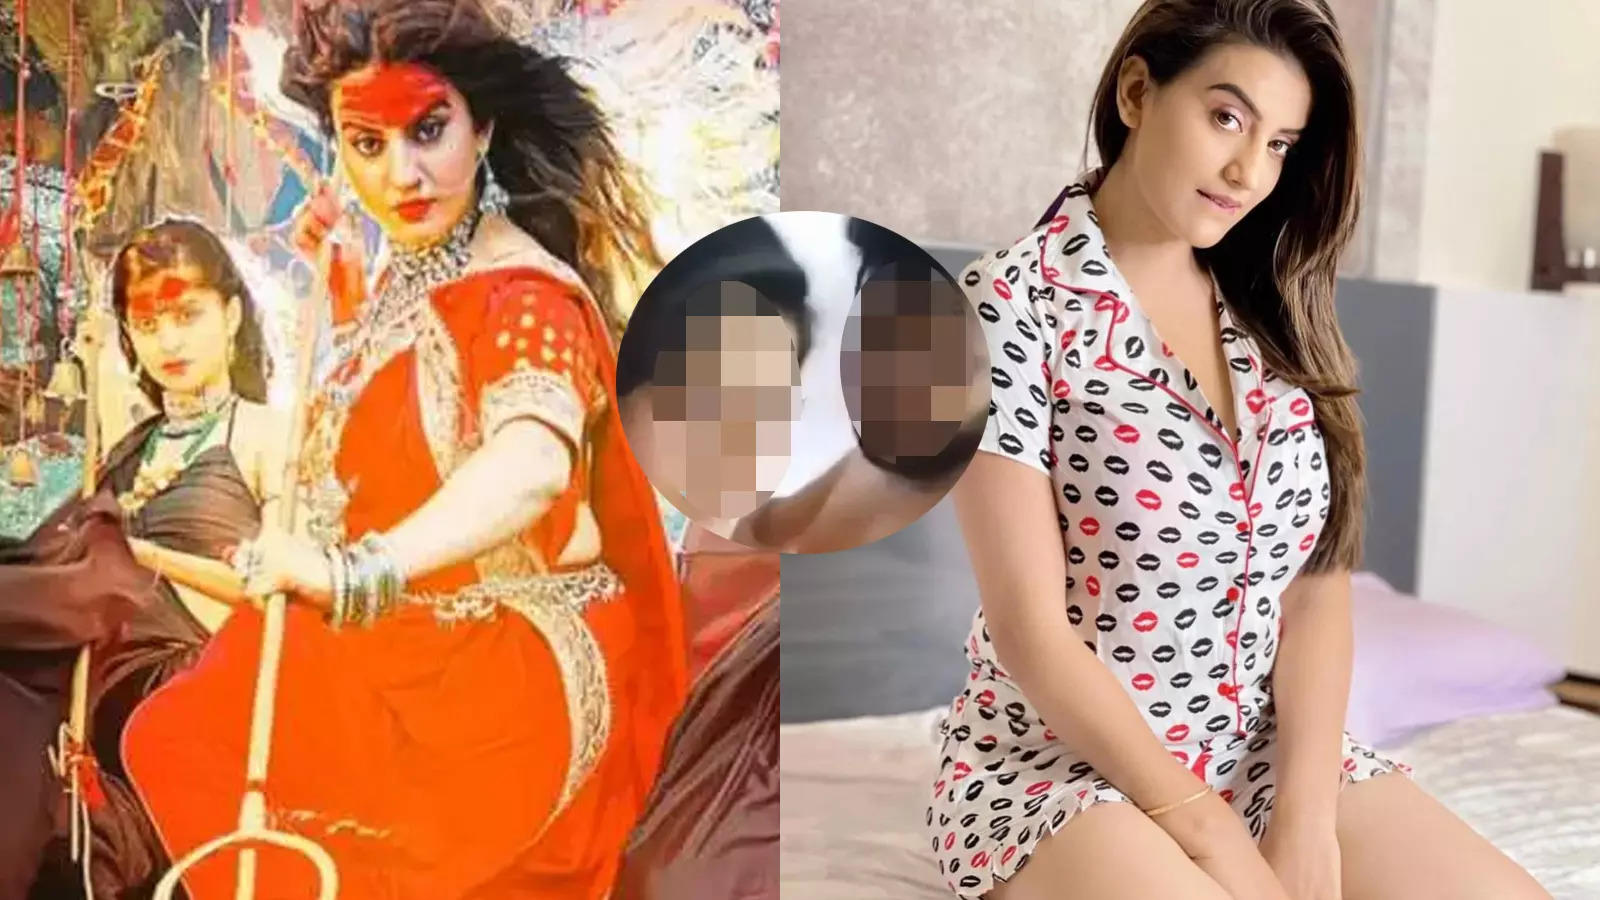 Akshara Singh X Photo X Photo X Photo Hd - Akshara Singh MMS leak controversy: Bhojpuri actress' 'goddess' avatar  shocks netizens, trolls write 'Jo MMS video aaya tha vo sai hai na' |  Bhojpuri Movie News - Times of India